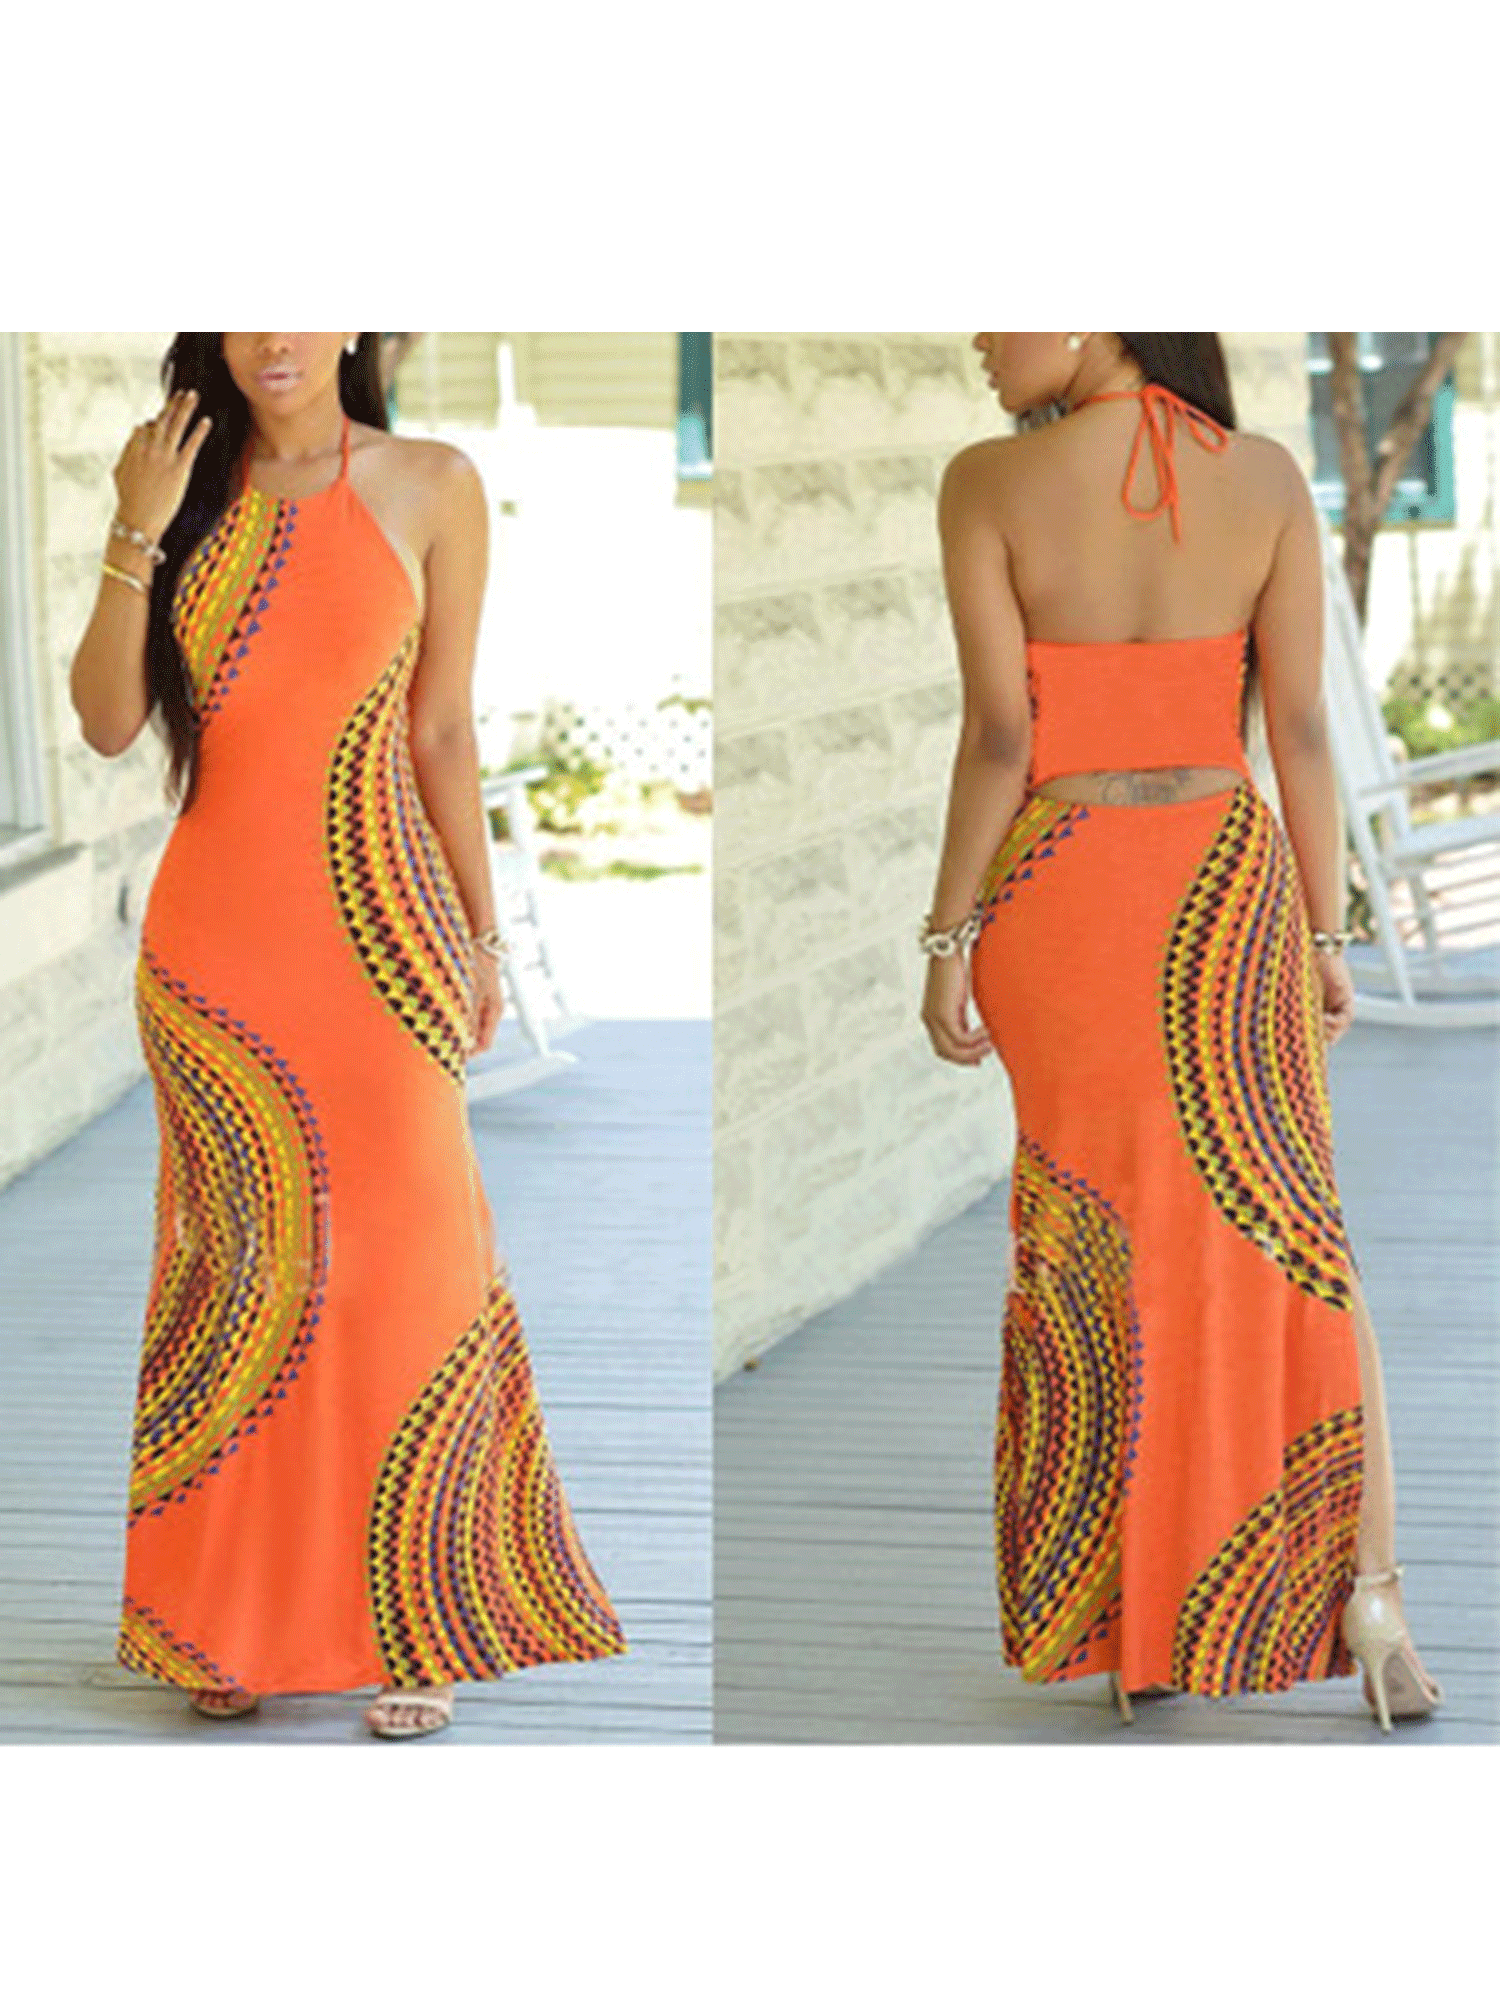 Topcobe - Topcobe Orange Long Maxi Bodycon Dresses for Women, Tight ...